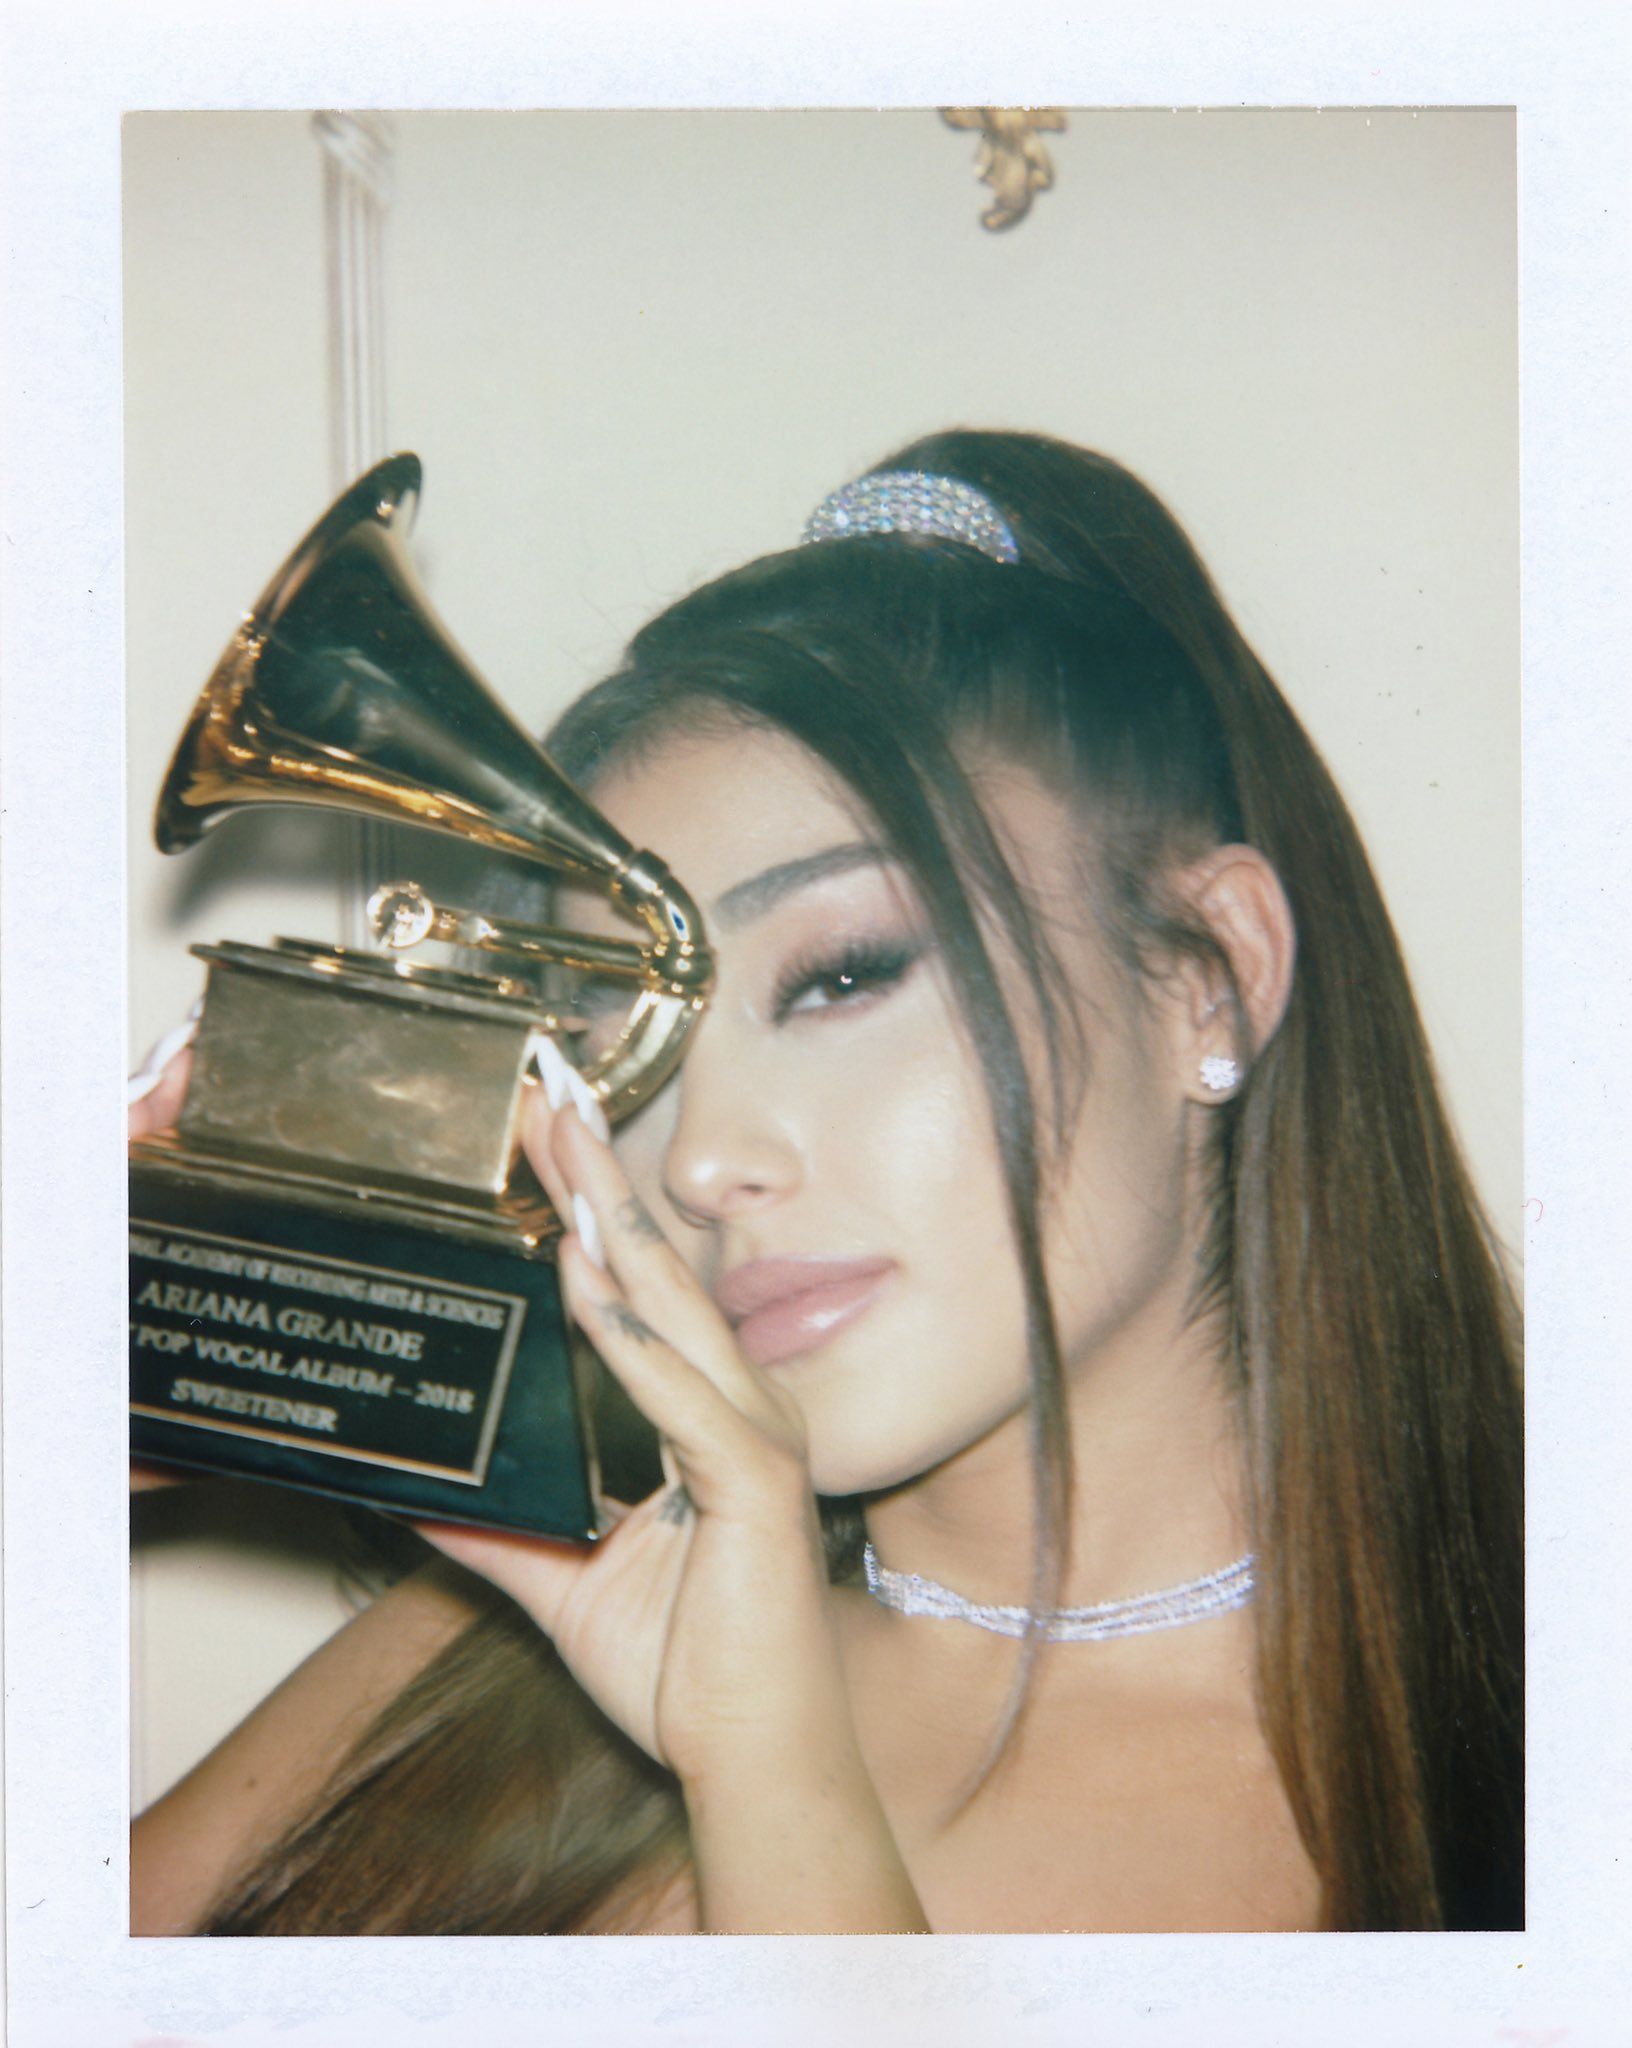 All Ariana Grande Grammy Nominations - Ariana Grande's Grammys